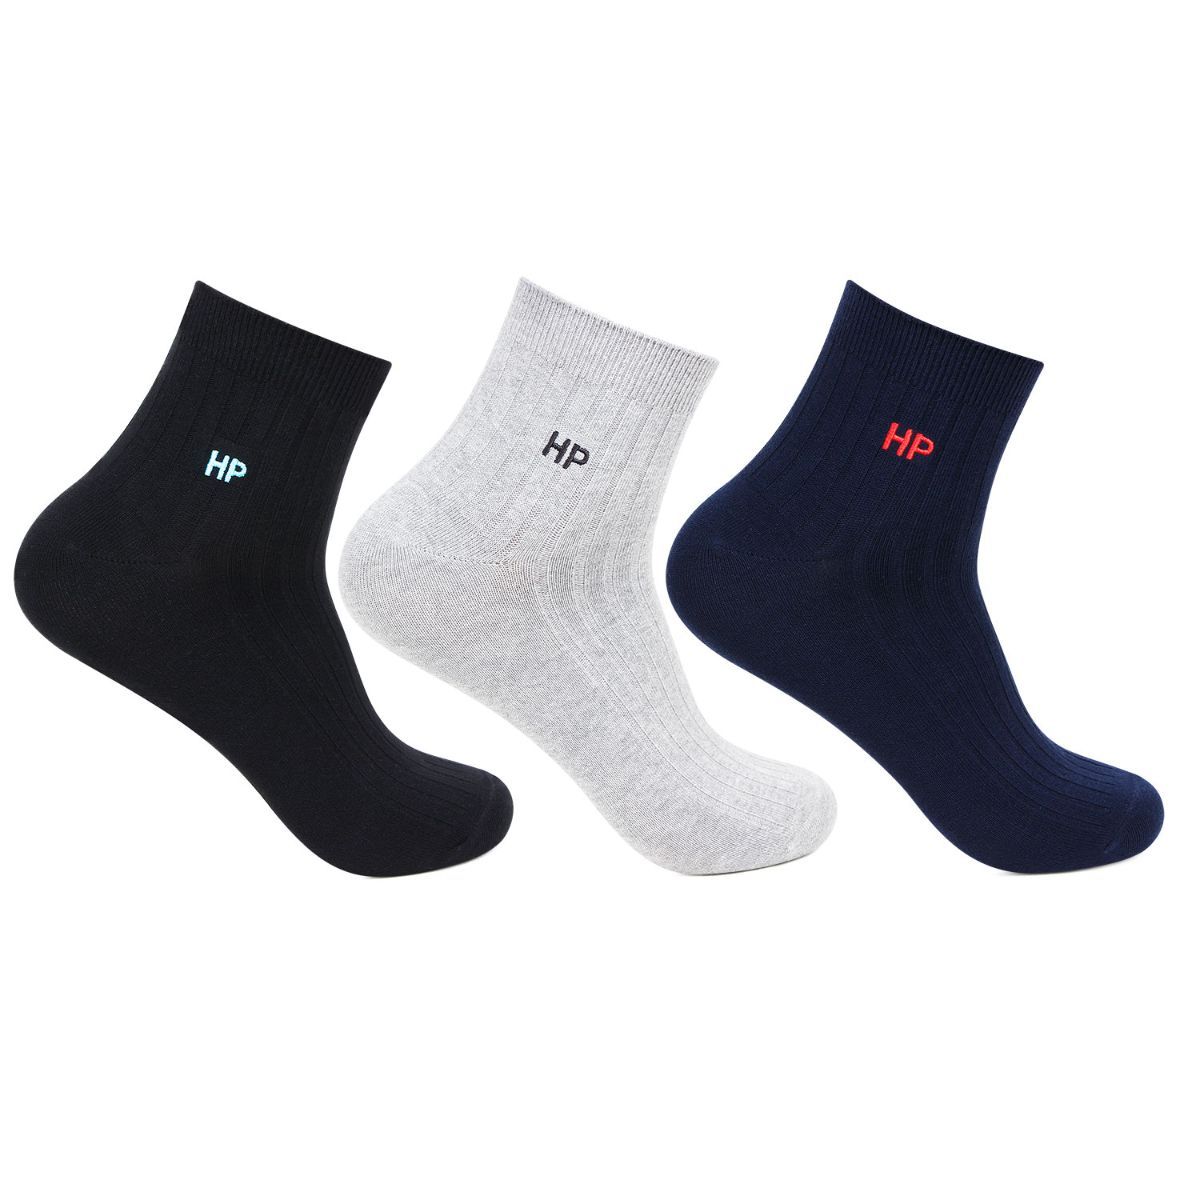 Bonjour Hush Puppies Men's Cotton Ankle Rib Socks - Pack Of 3 - Multi-Color (Free Size)